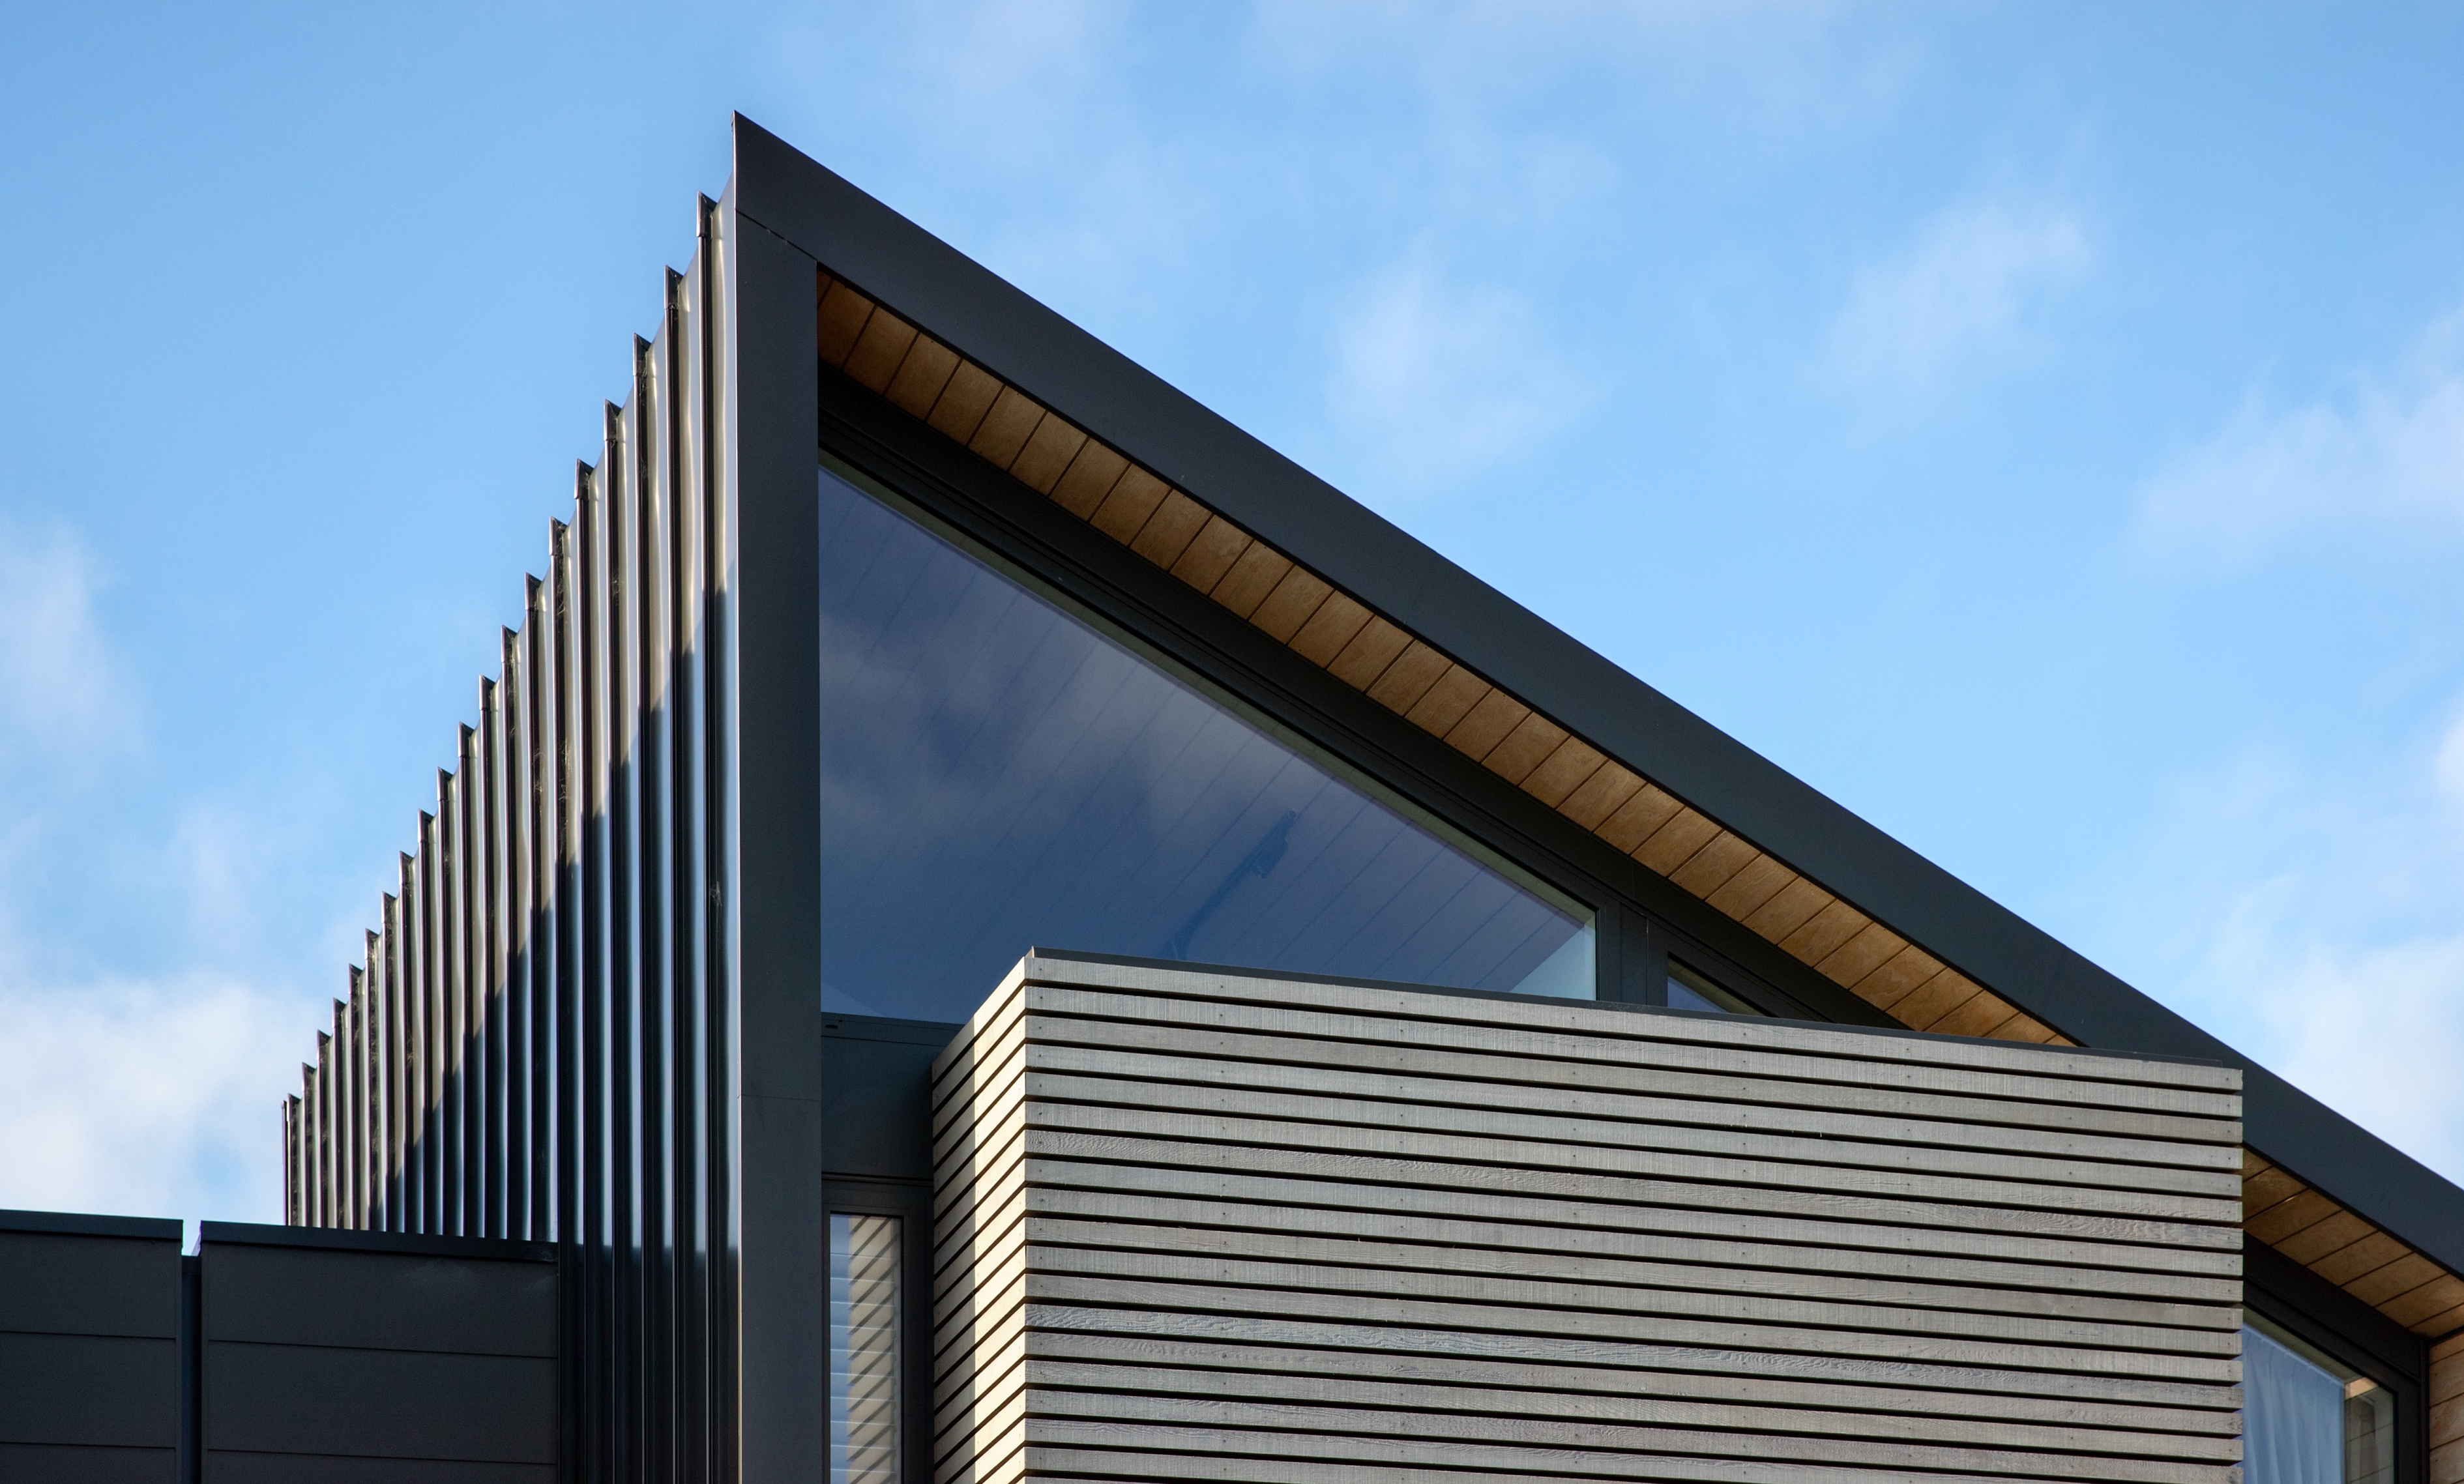 Peterborough Street pitched, dark-steel roof against blue sky